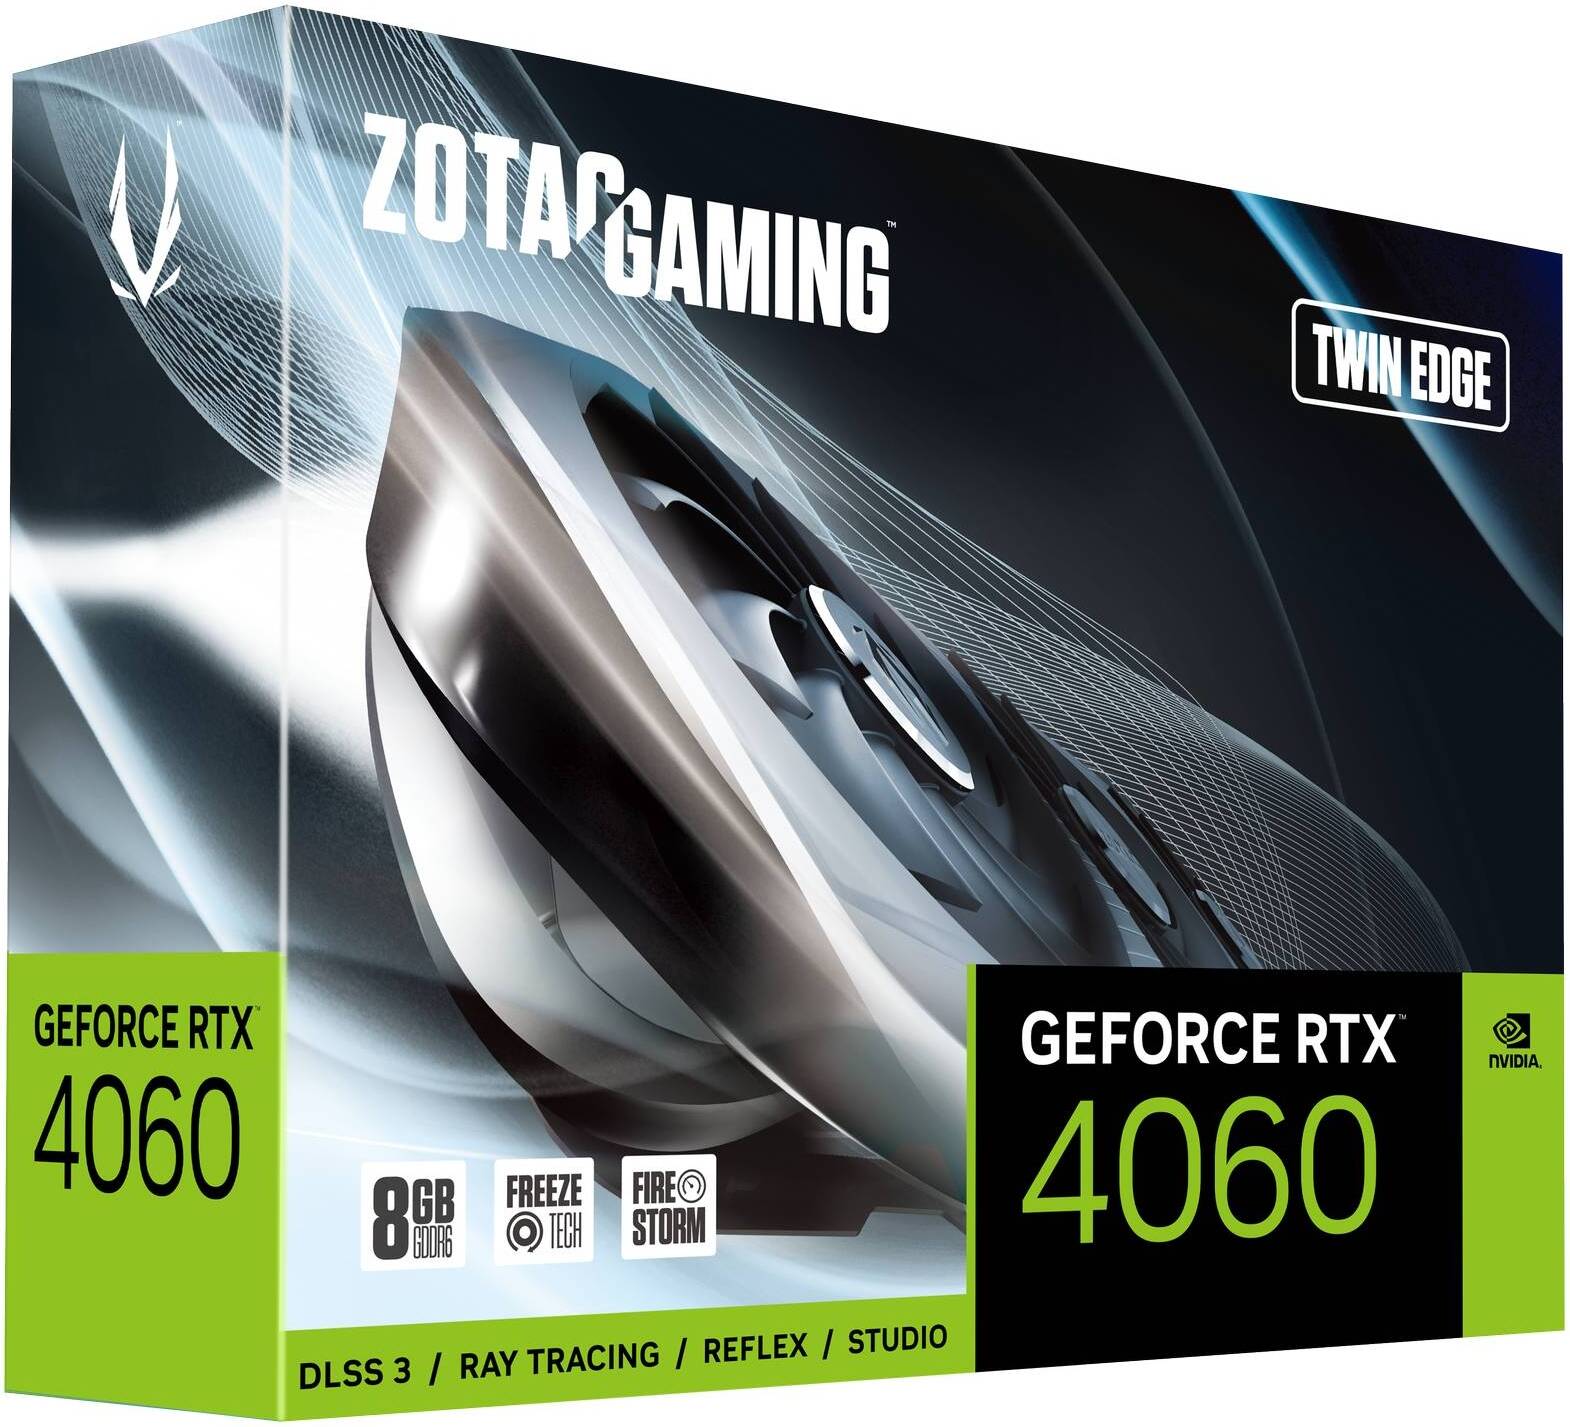 ZOTAC GAMING GeForce RTX 4060 Twin Edge Graphics Card, 8GB GDDR6